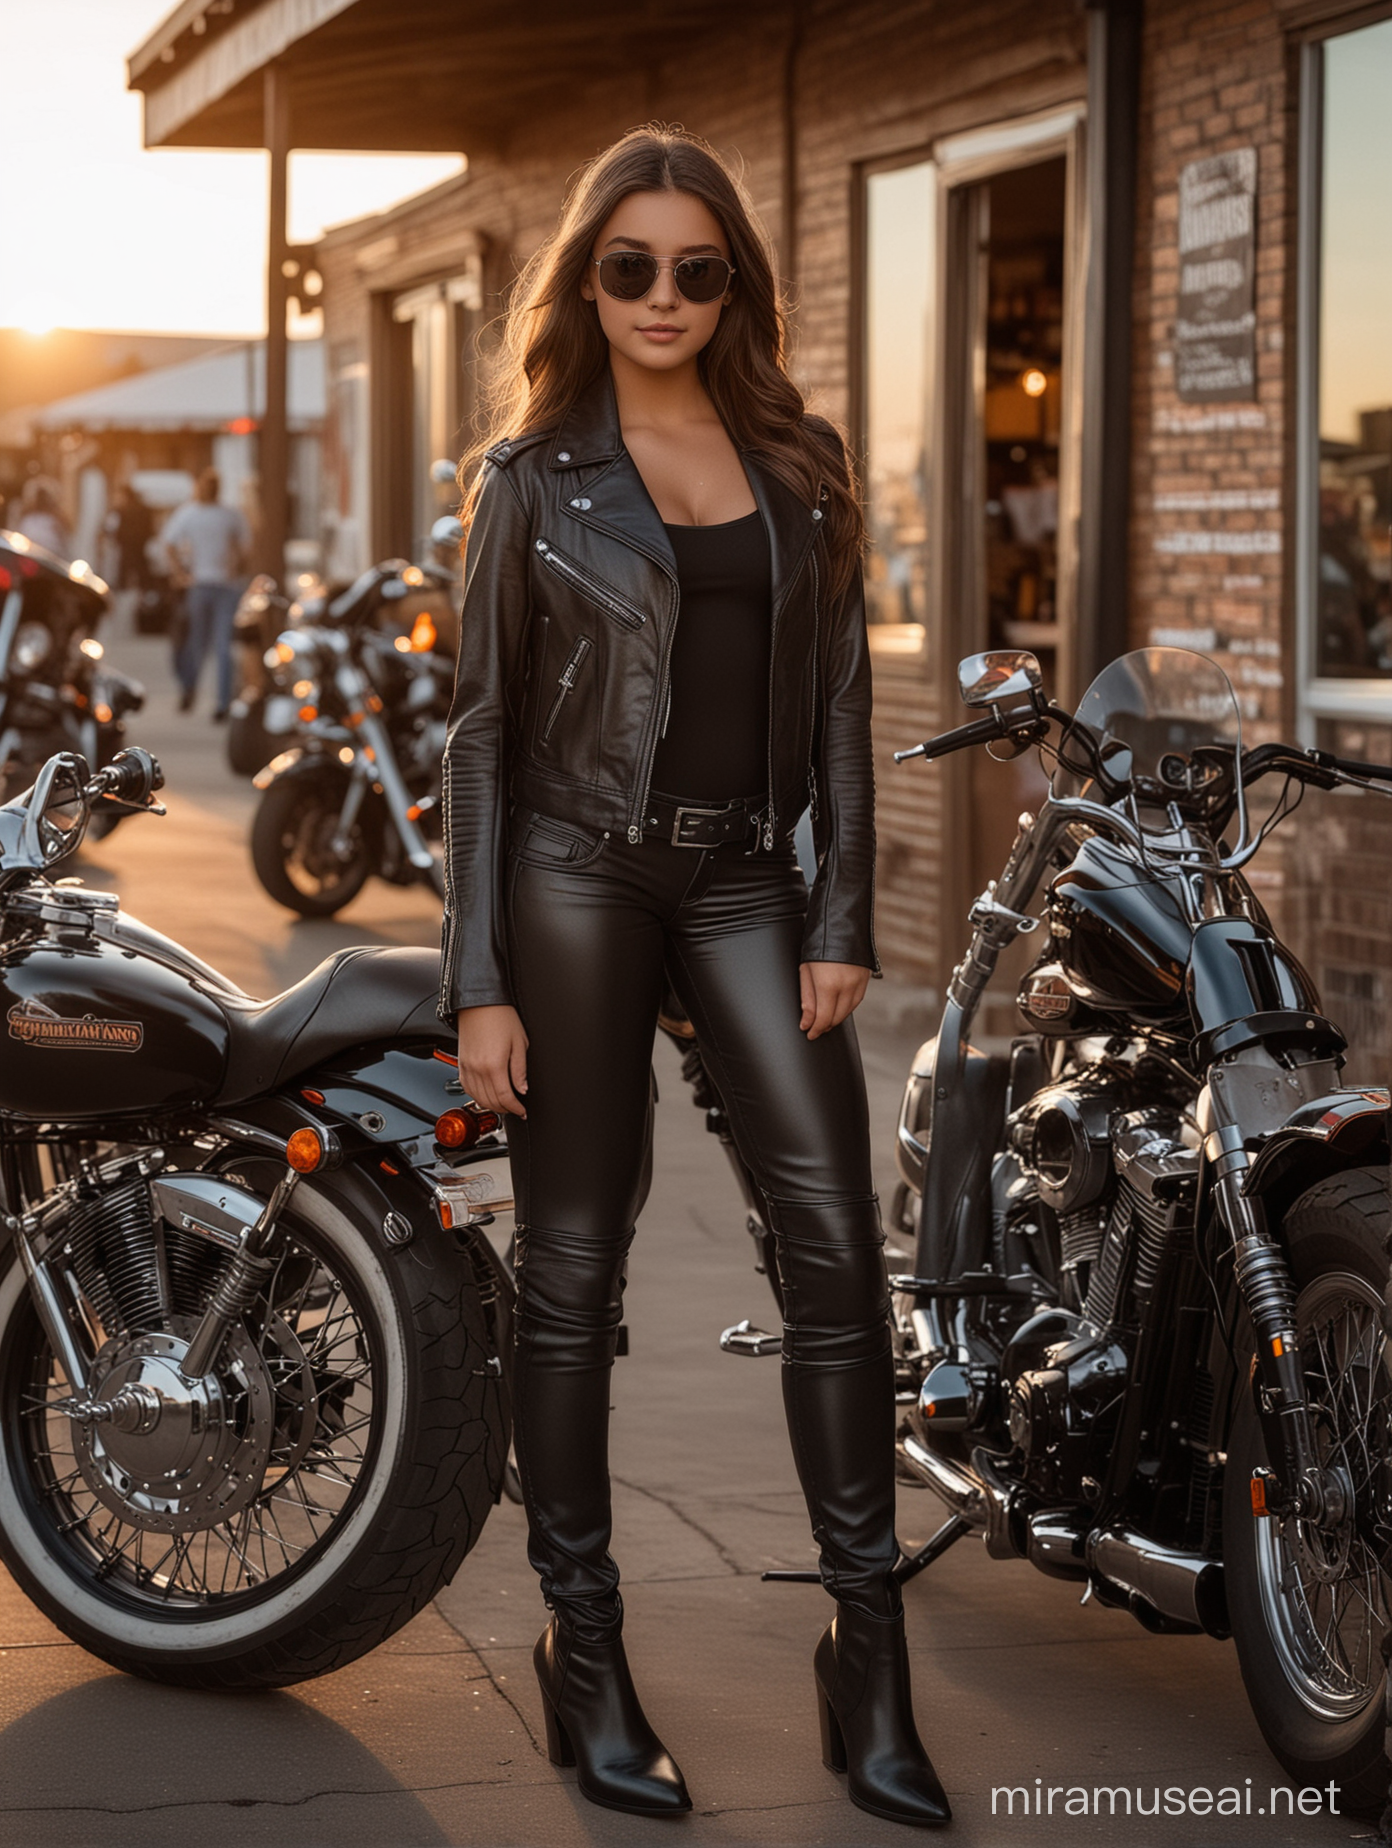 Teenage Biker Girl in Black Leather Poses by Harley Davidson at Sunset